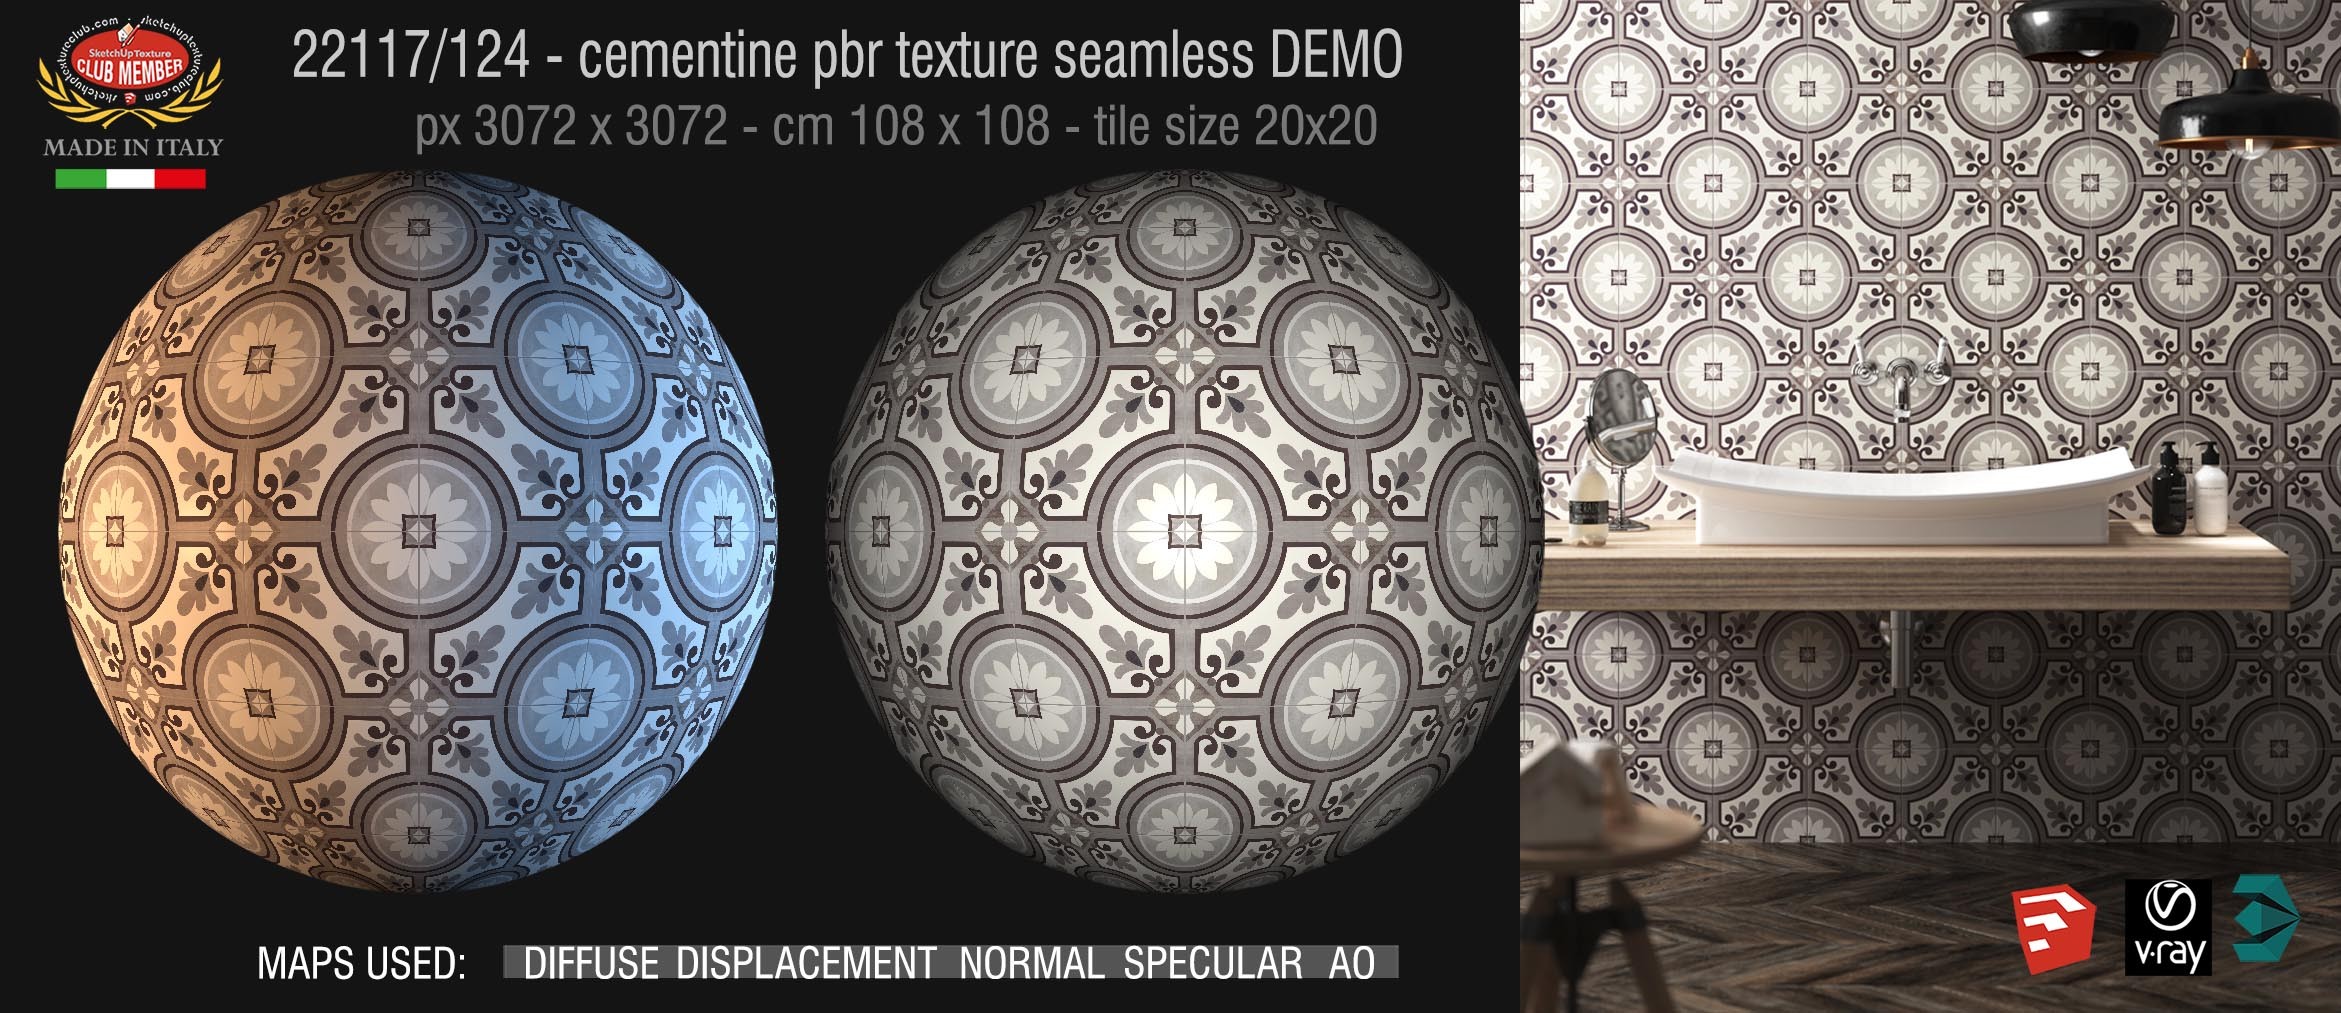 22117/124 cementine tiles Pbr seamless texture DEMO - porcelain stoneware PARIS collection